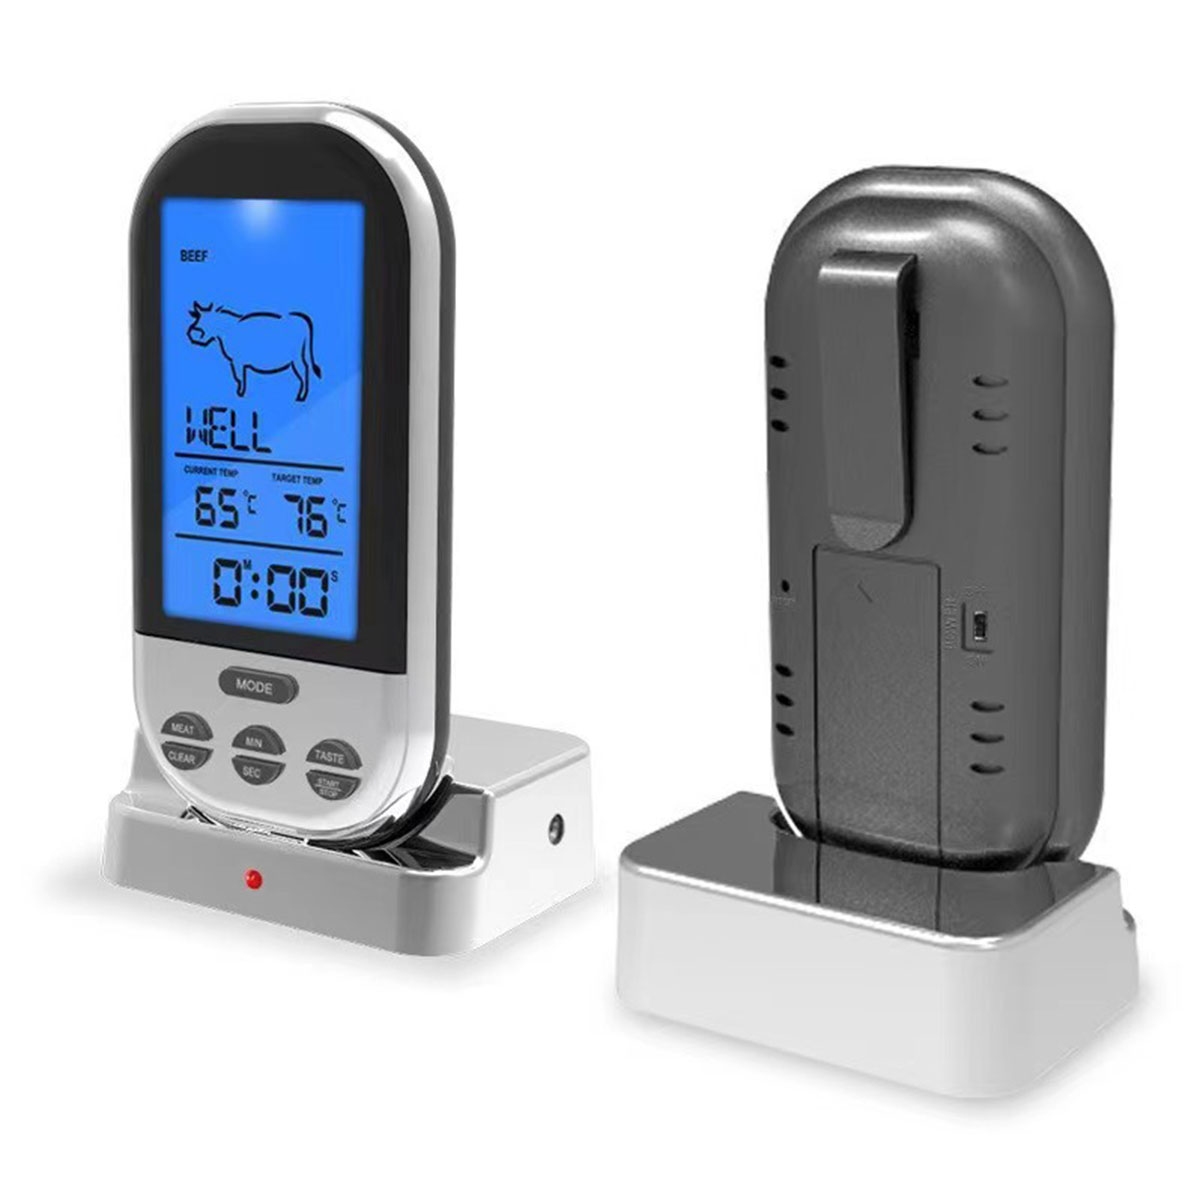 BRIGHTAKE Drahtloses BBQ-Fleischthermometer - Thermometer Präzise Grillkontrolle